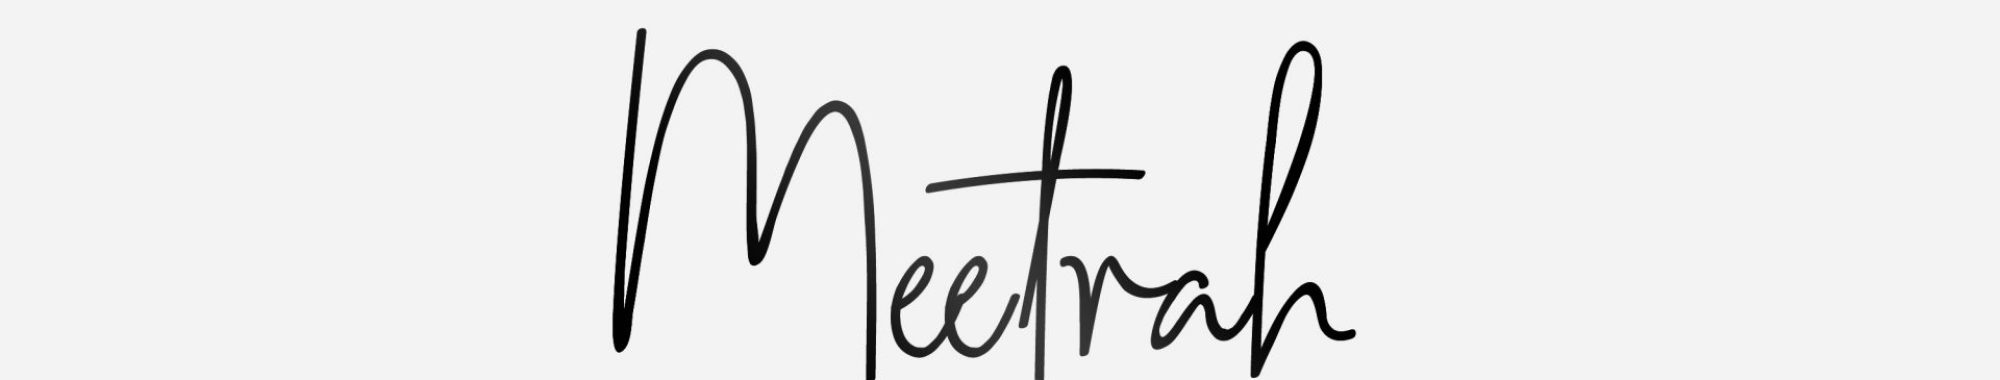 Meetrah.com